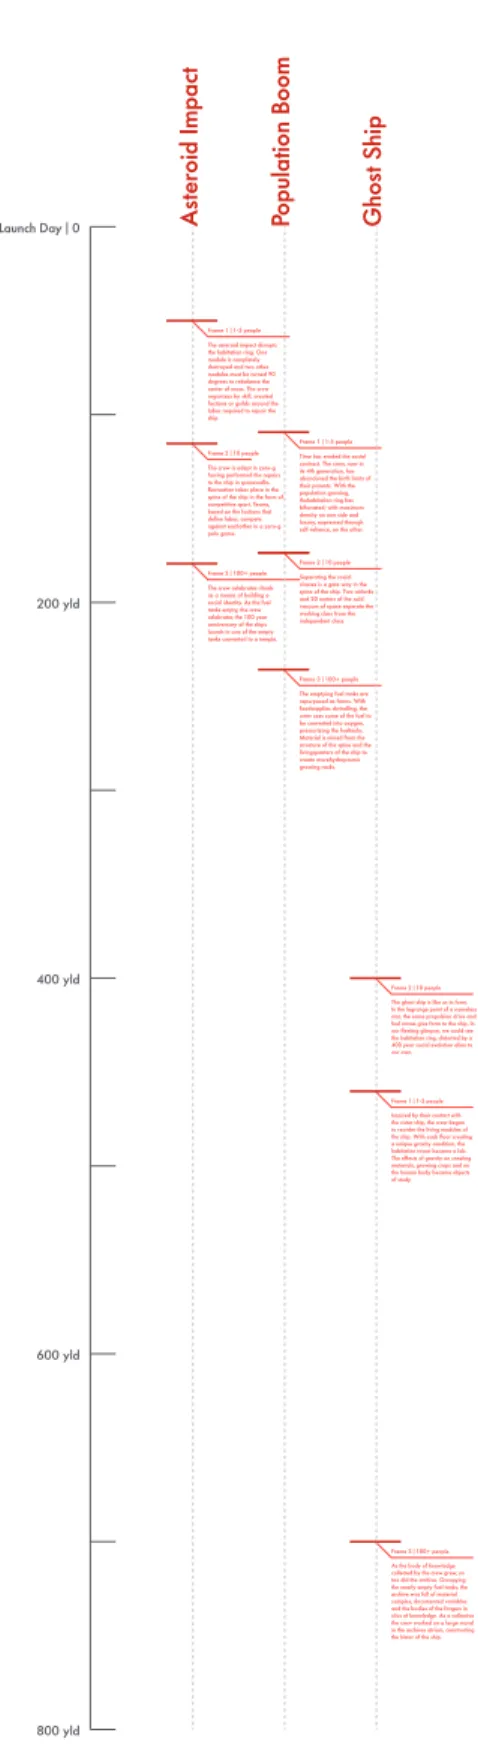 Figure 45: Parallel Narrative Timeline Figure 46: Scenario Planning Timeline